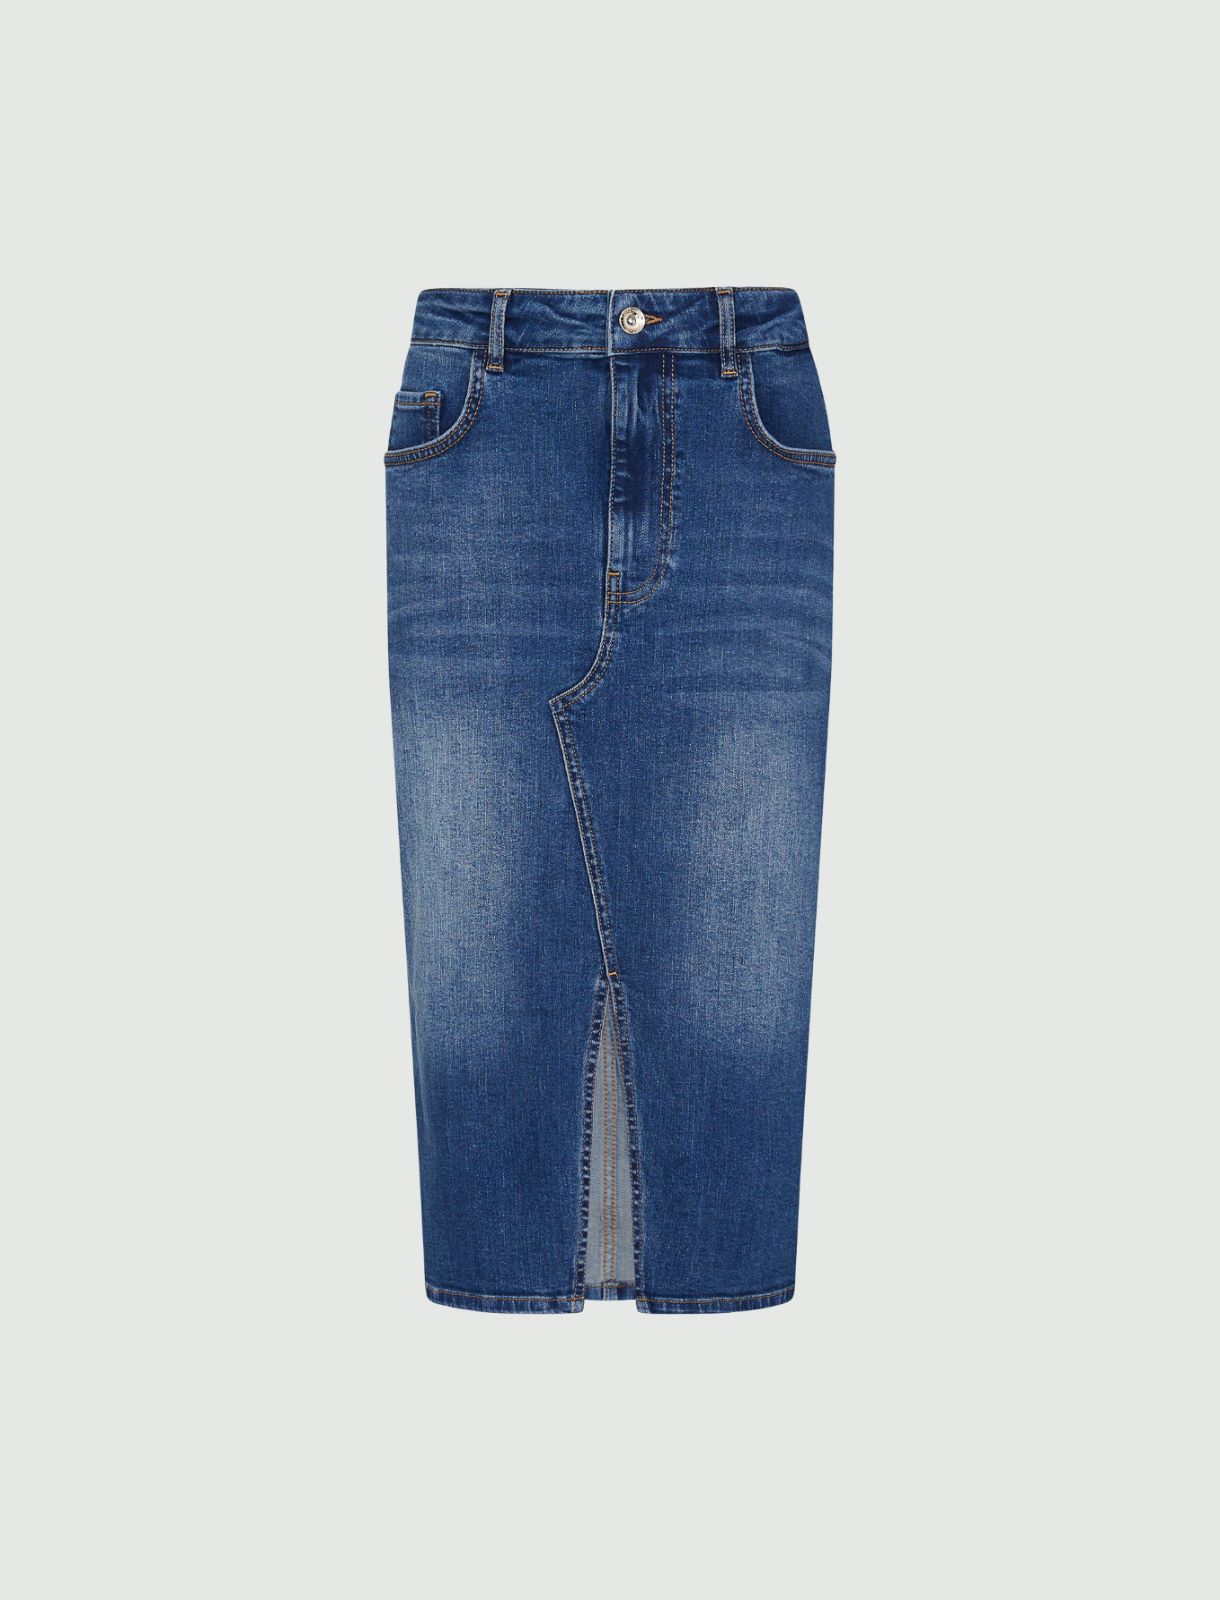 Denim skirt - Blue jeans - Emme 